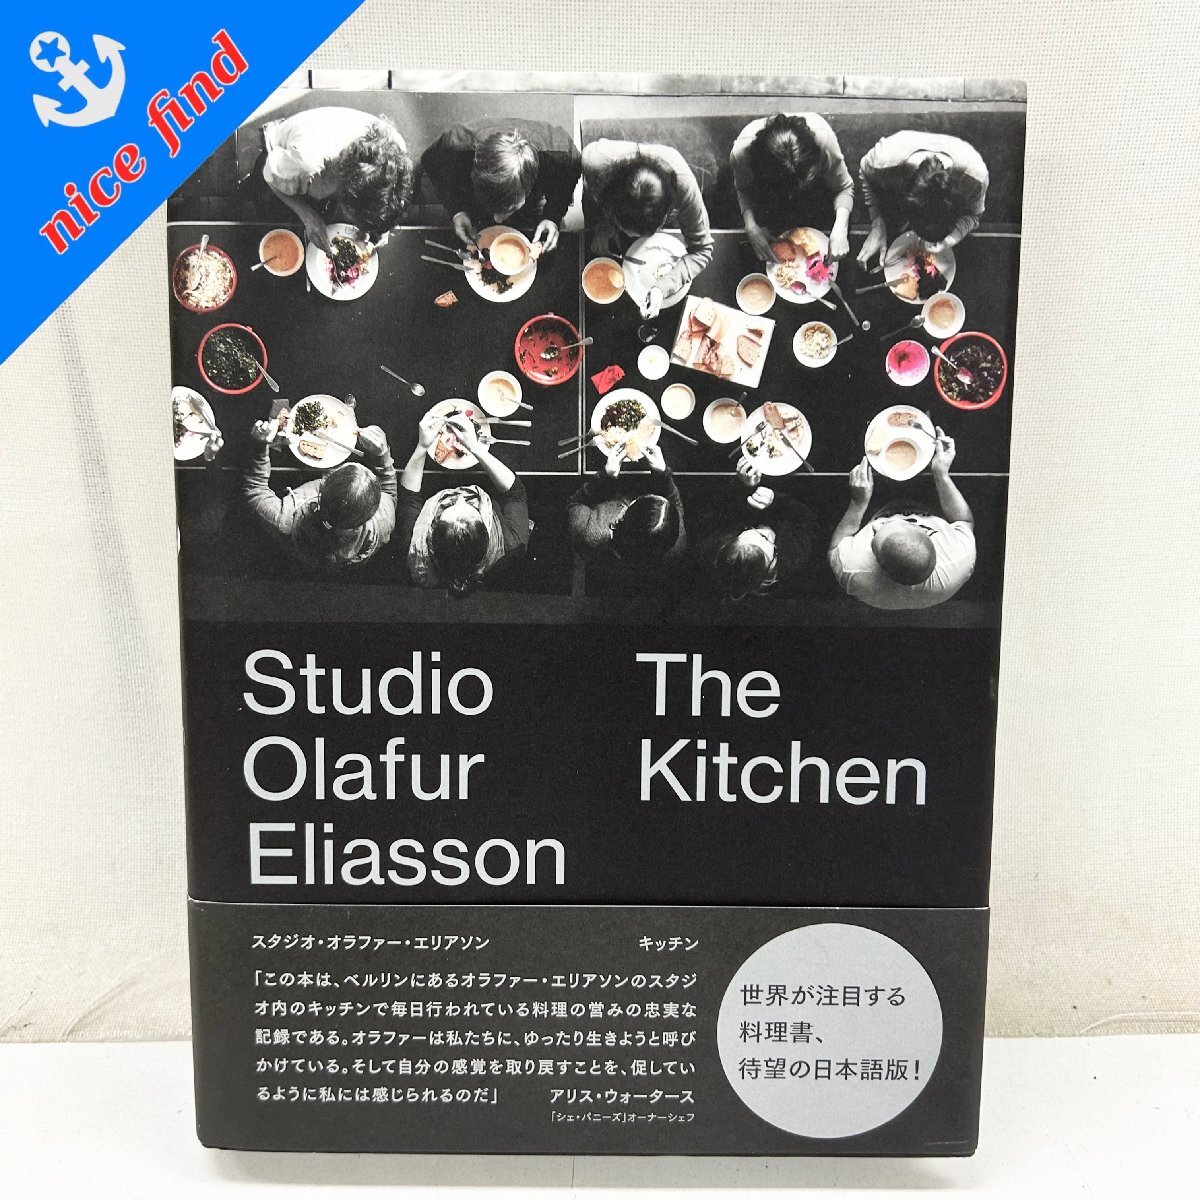 ◆The Kitchen◆Studio Olafur Eliasson スタジオ オラファー エリアソン キッチン 美術出版社 帯付 初版本 日本語版 料理本 レシピ 料理書_画像1